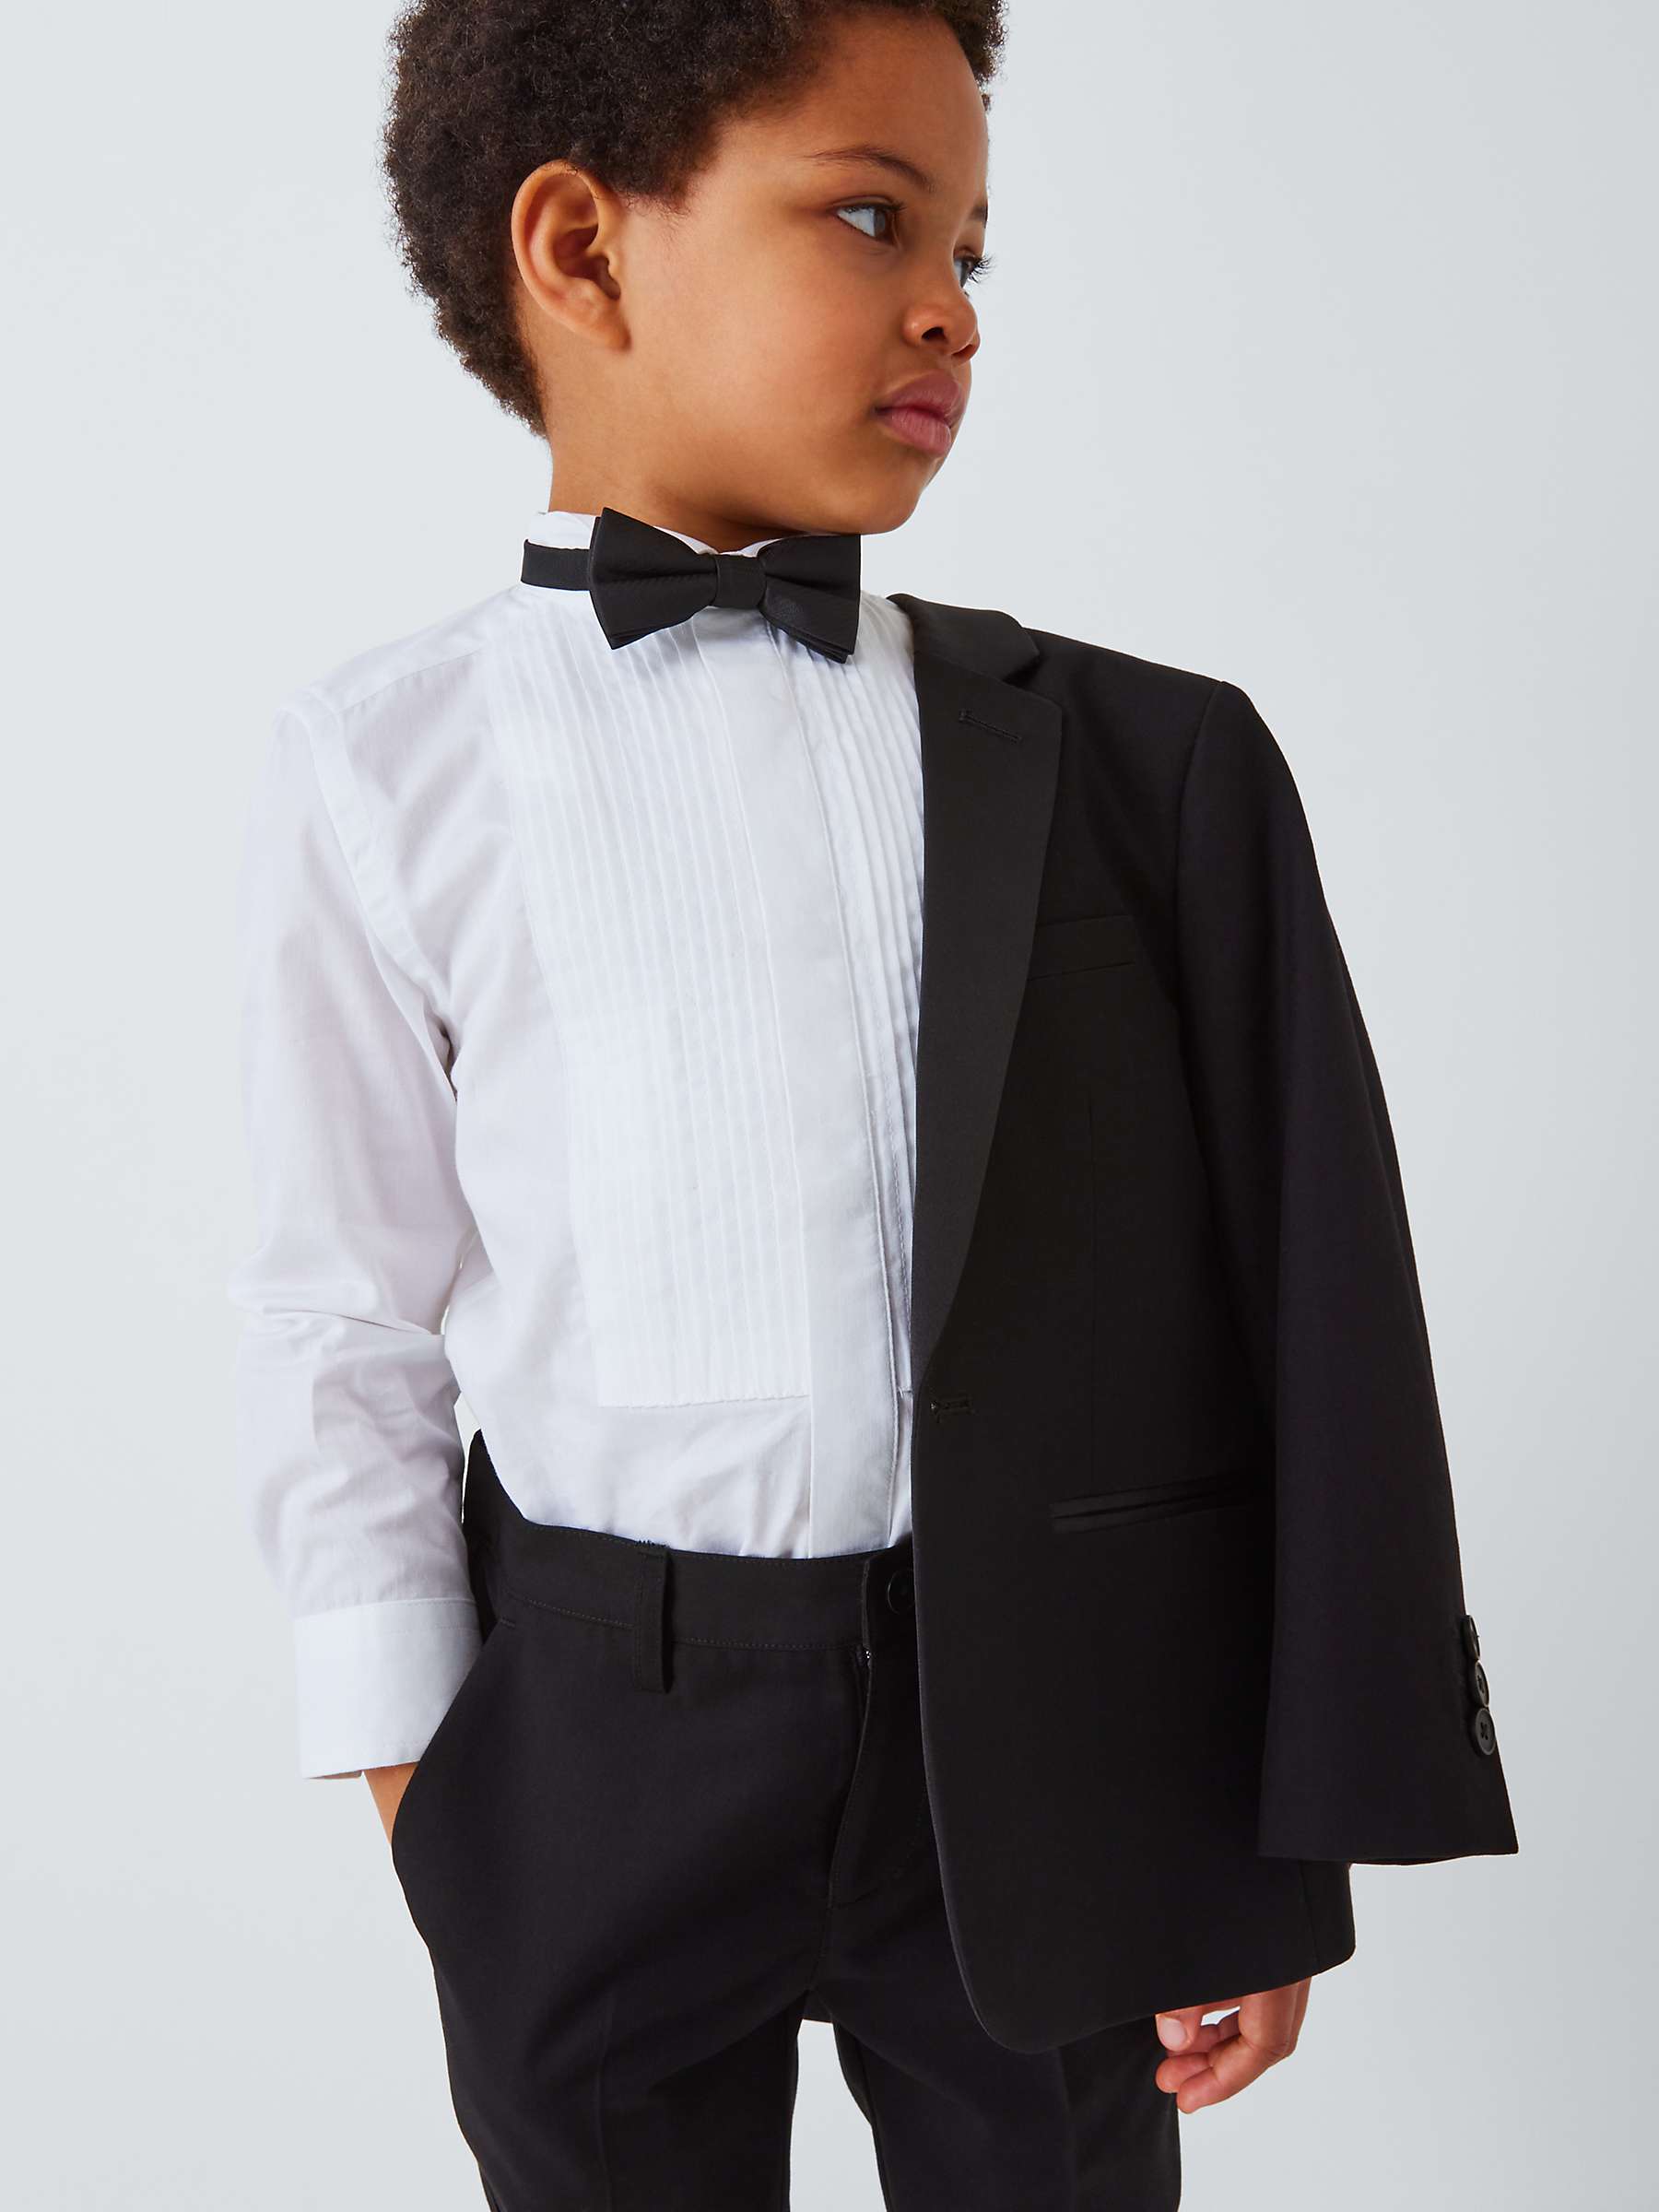 Buy John Lewis Heirloom Collection Kids' Tuxedo Suit Trousers, Black Online at johnlewis.com